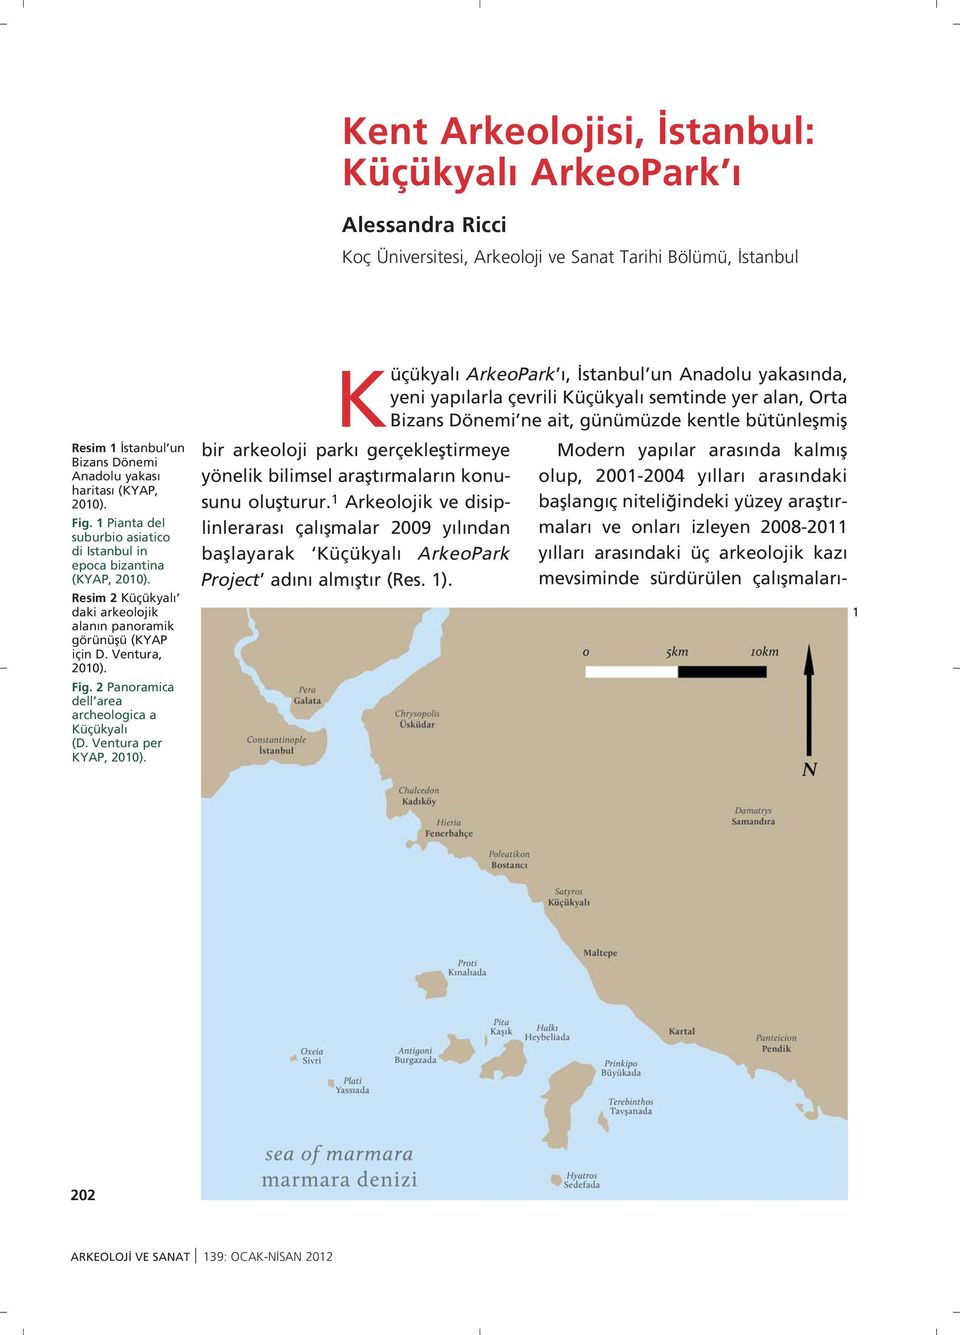 2 Panoramica dell area archeologica a Küçükyal (D. Ventura per KYAP, 2010).